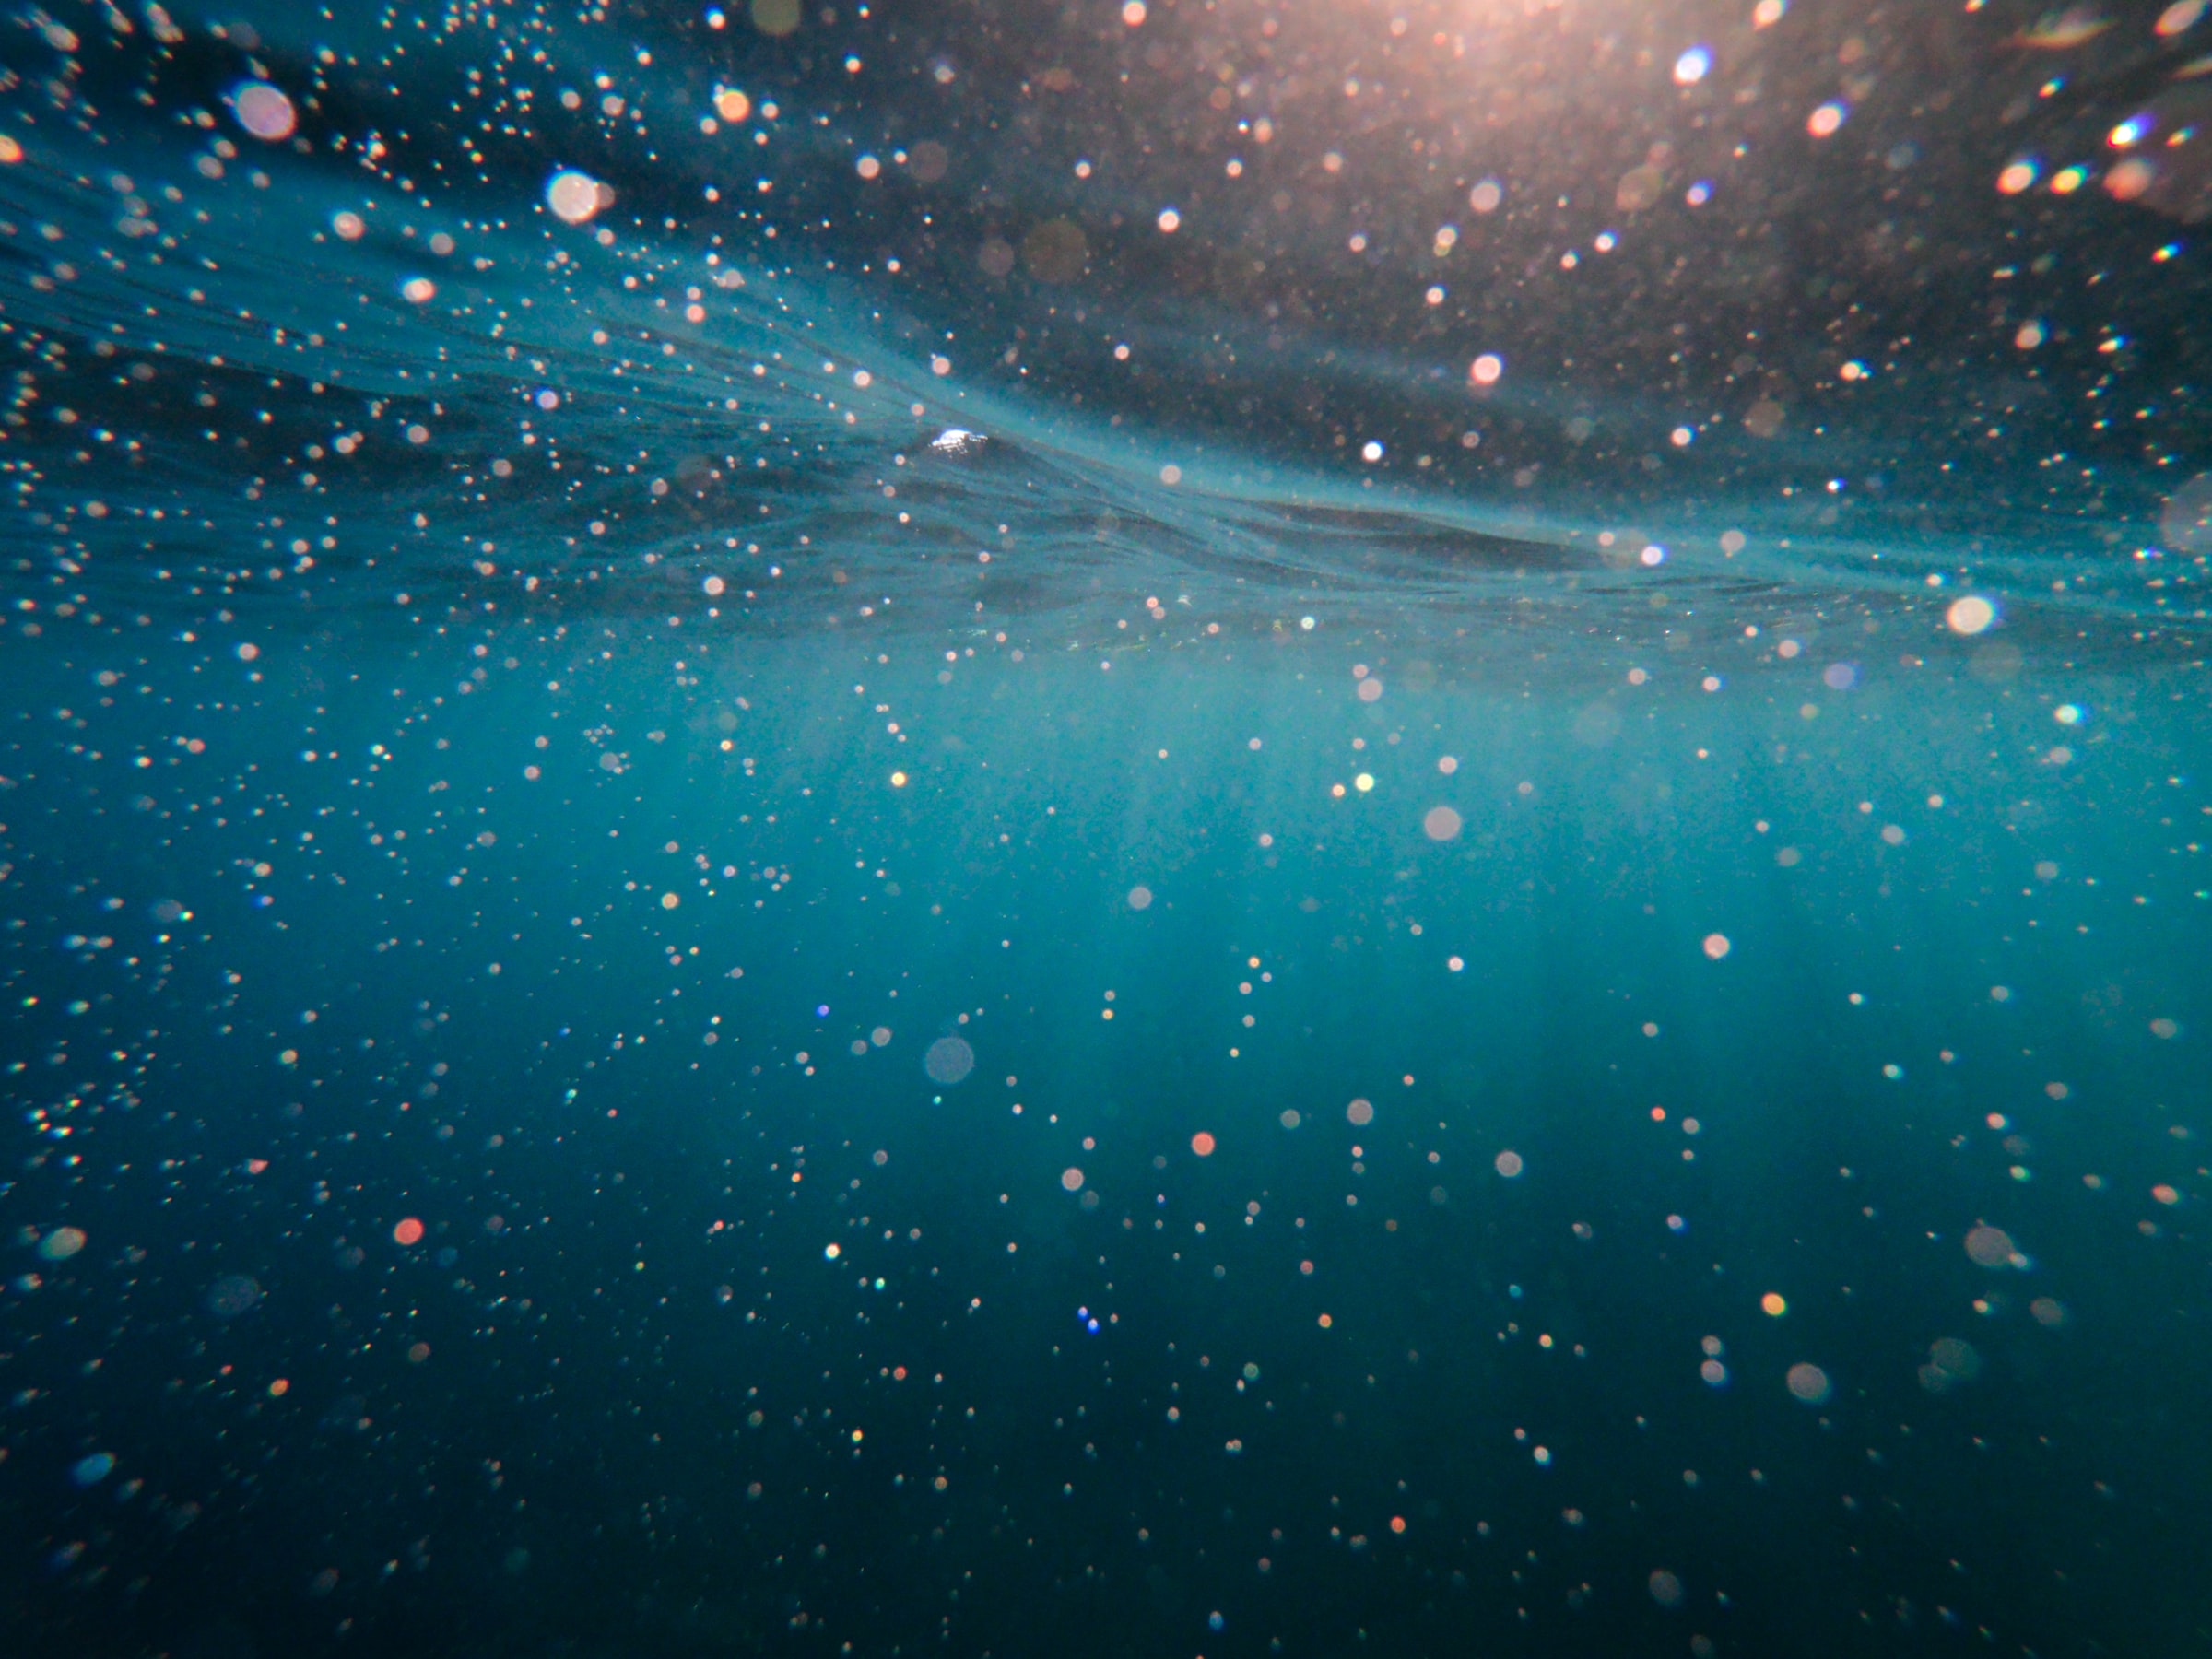 Ocean water, particle physics, marine optics: Photo by Cristian Palmer on Unsplash